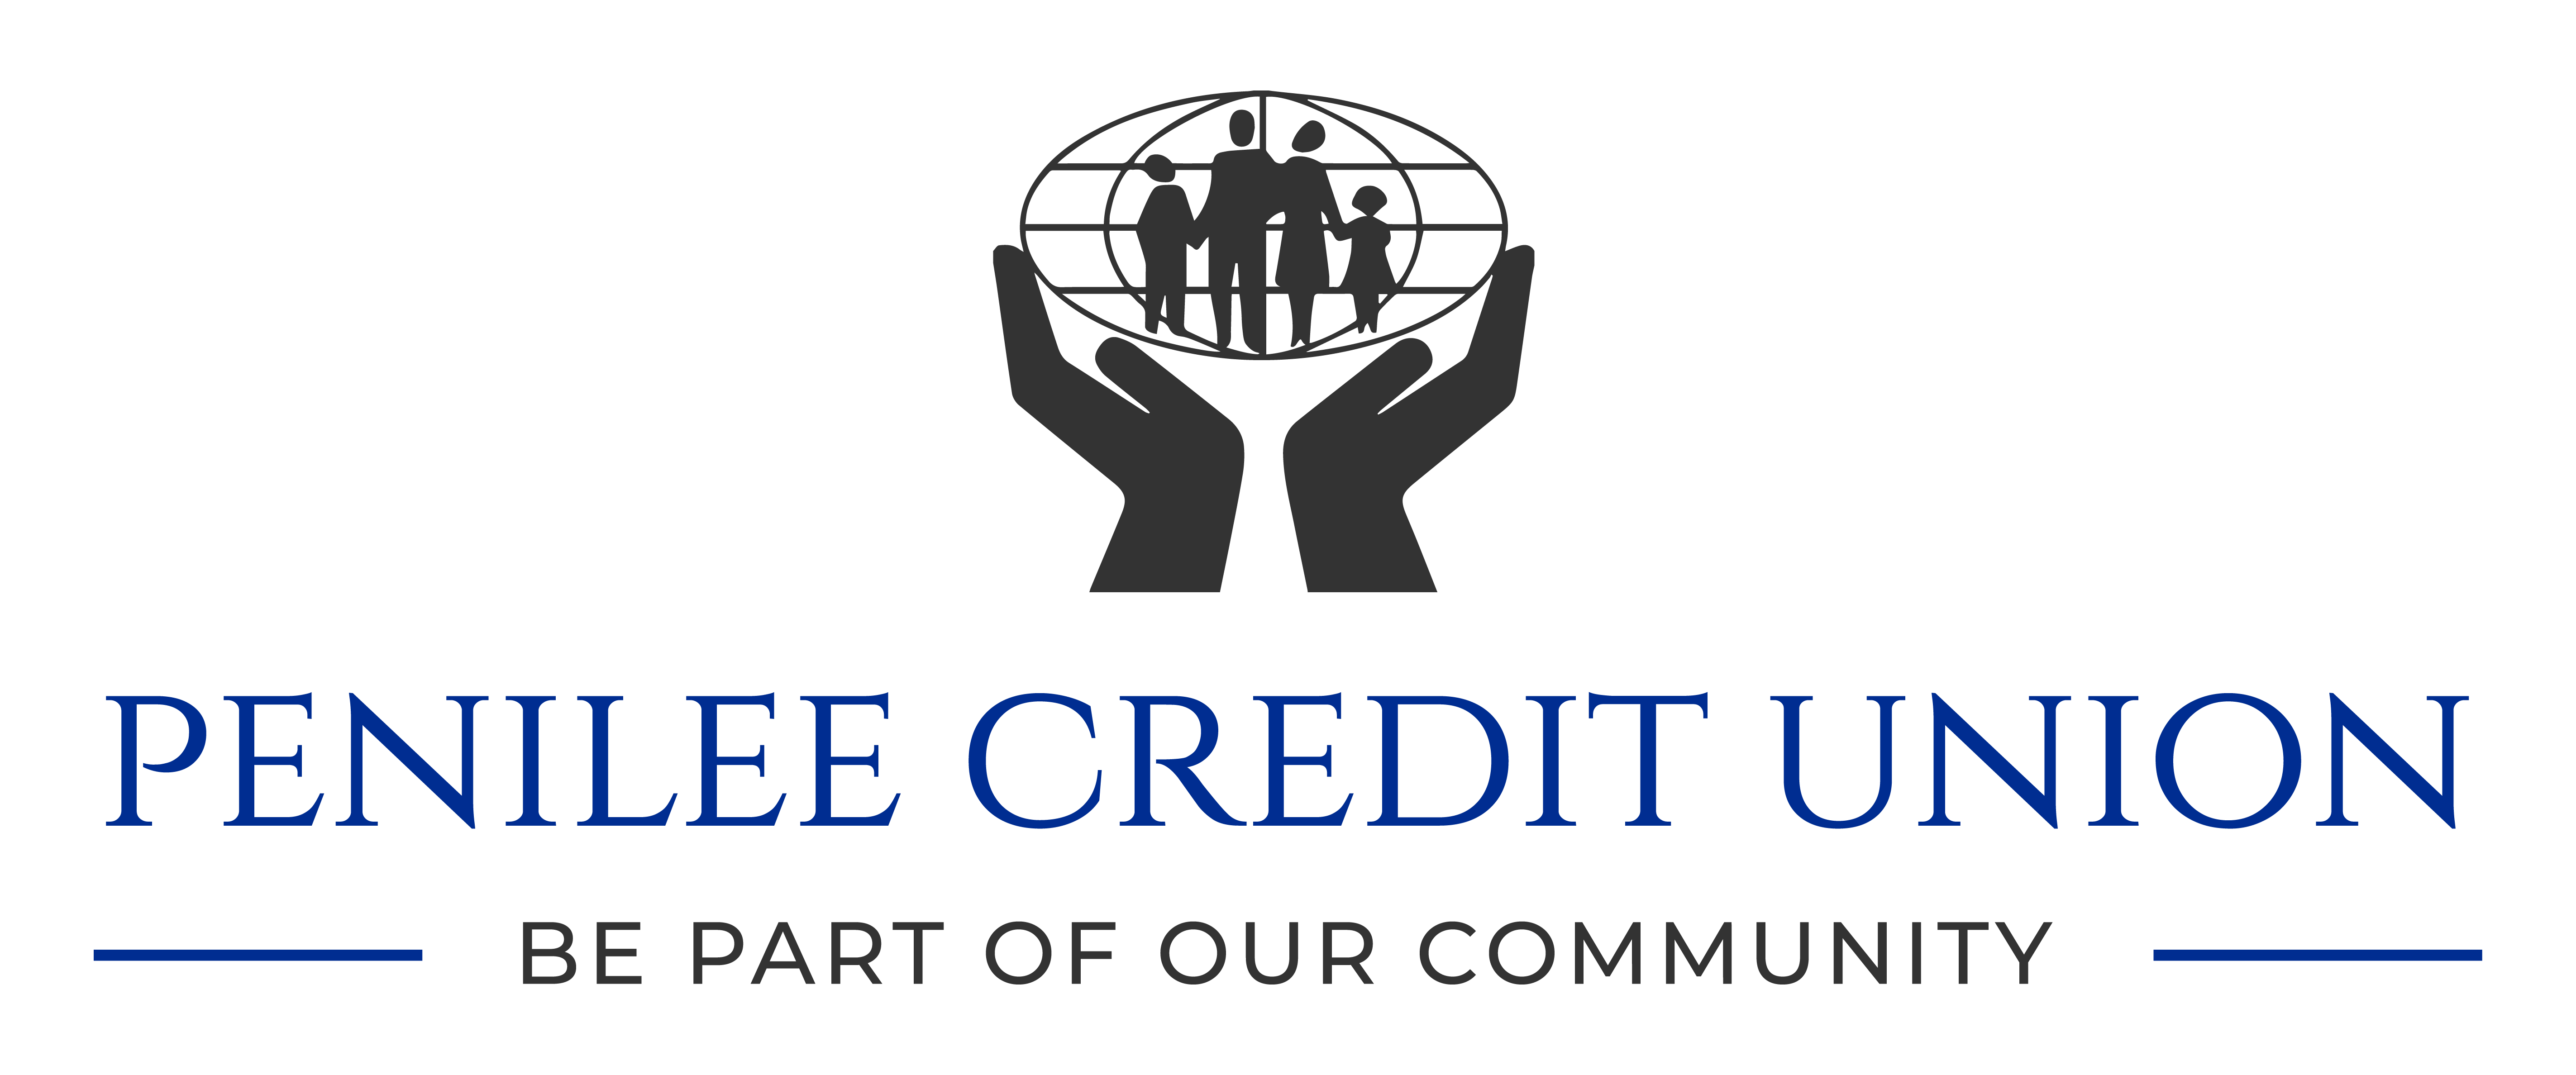 penilee credit union logo transparent